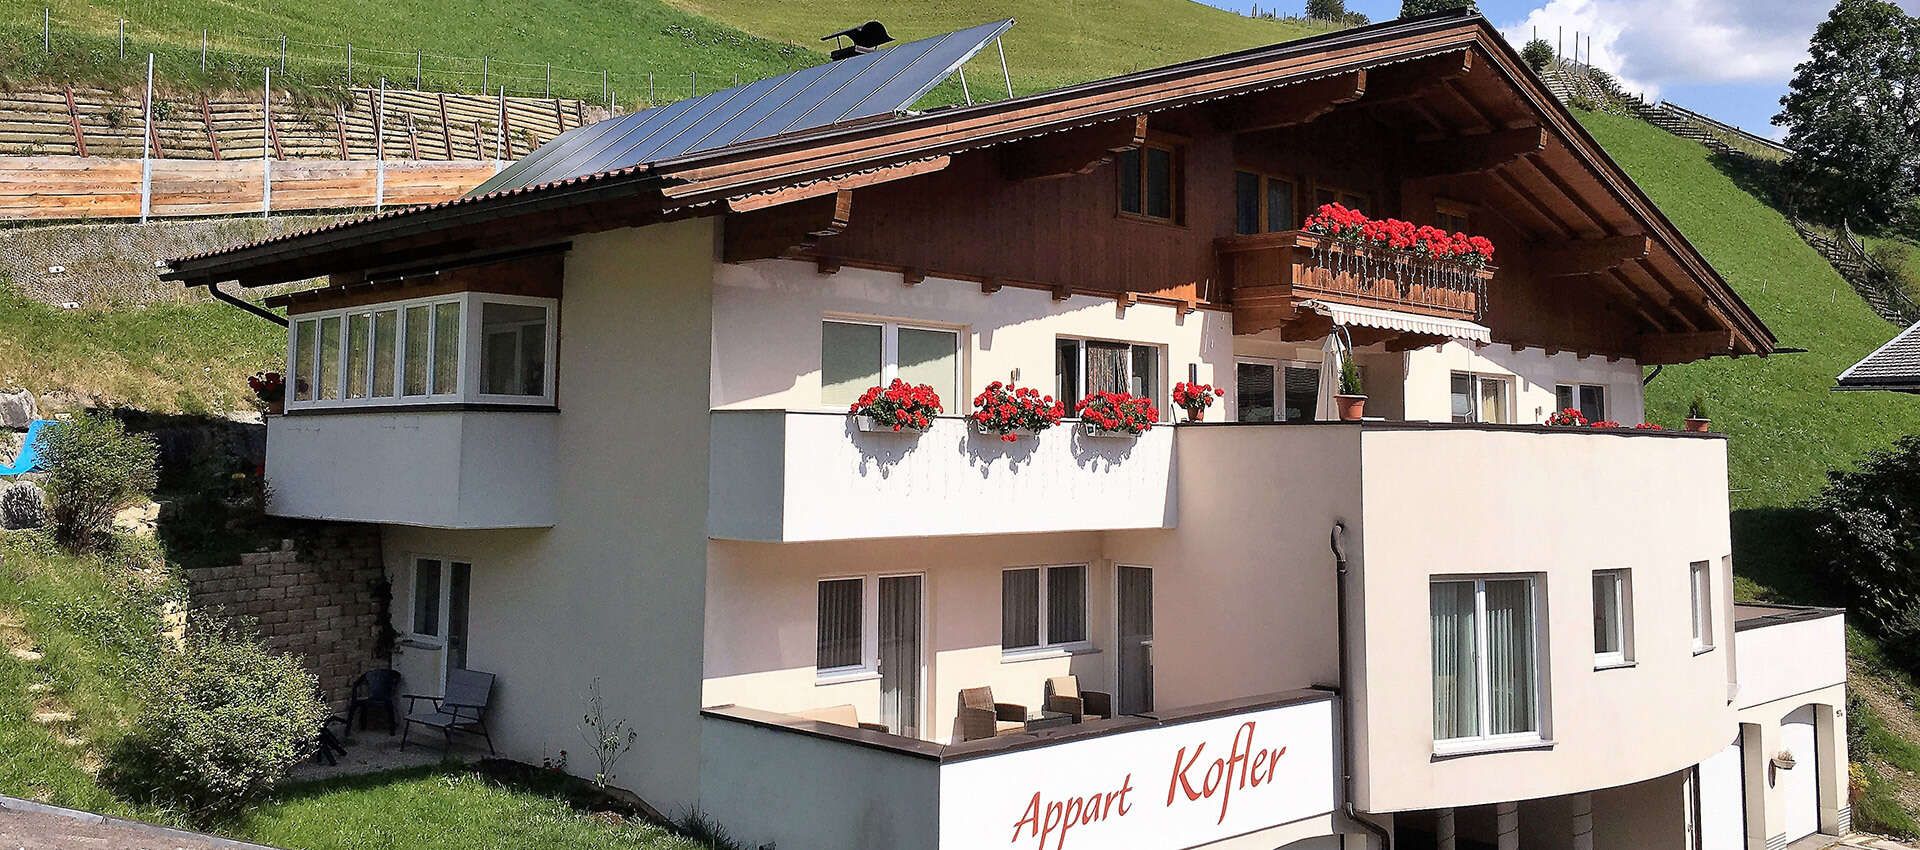 Appart Kofler Gerlos Tirol